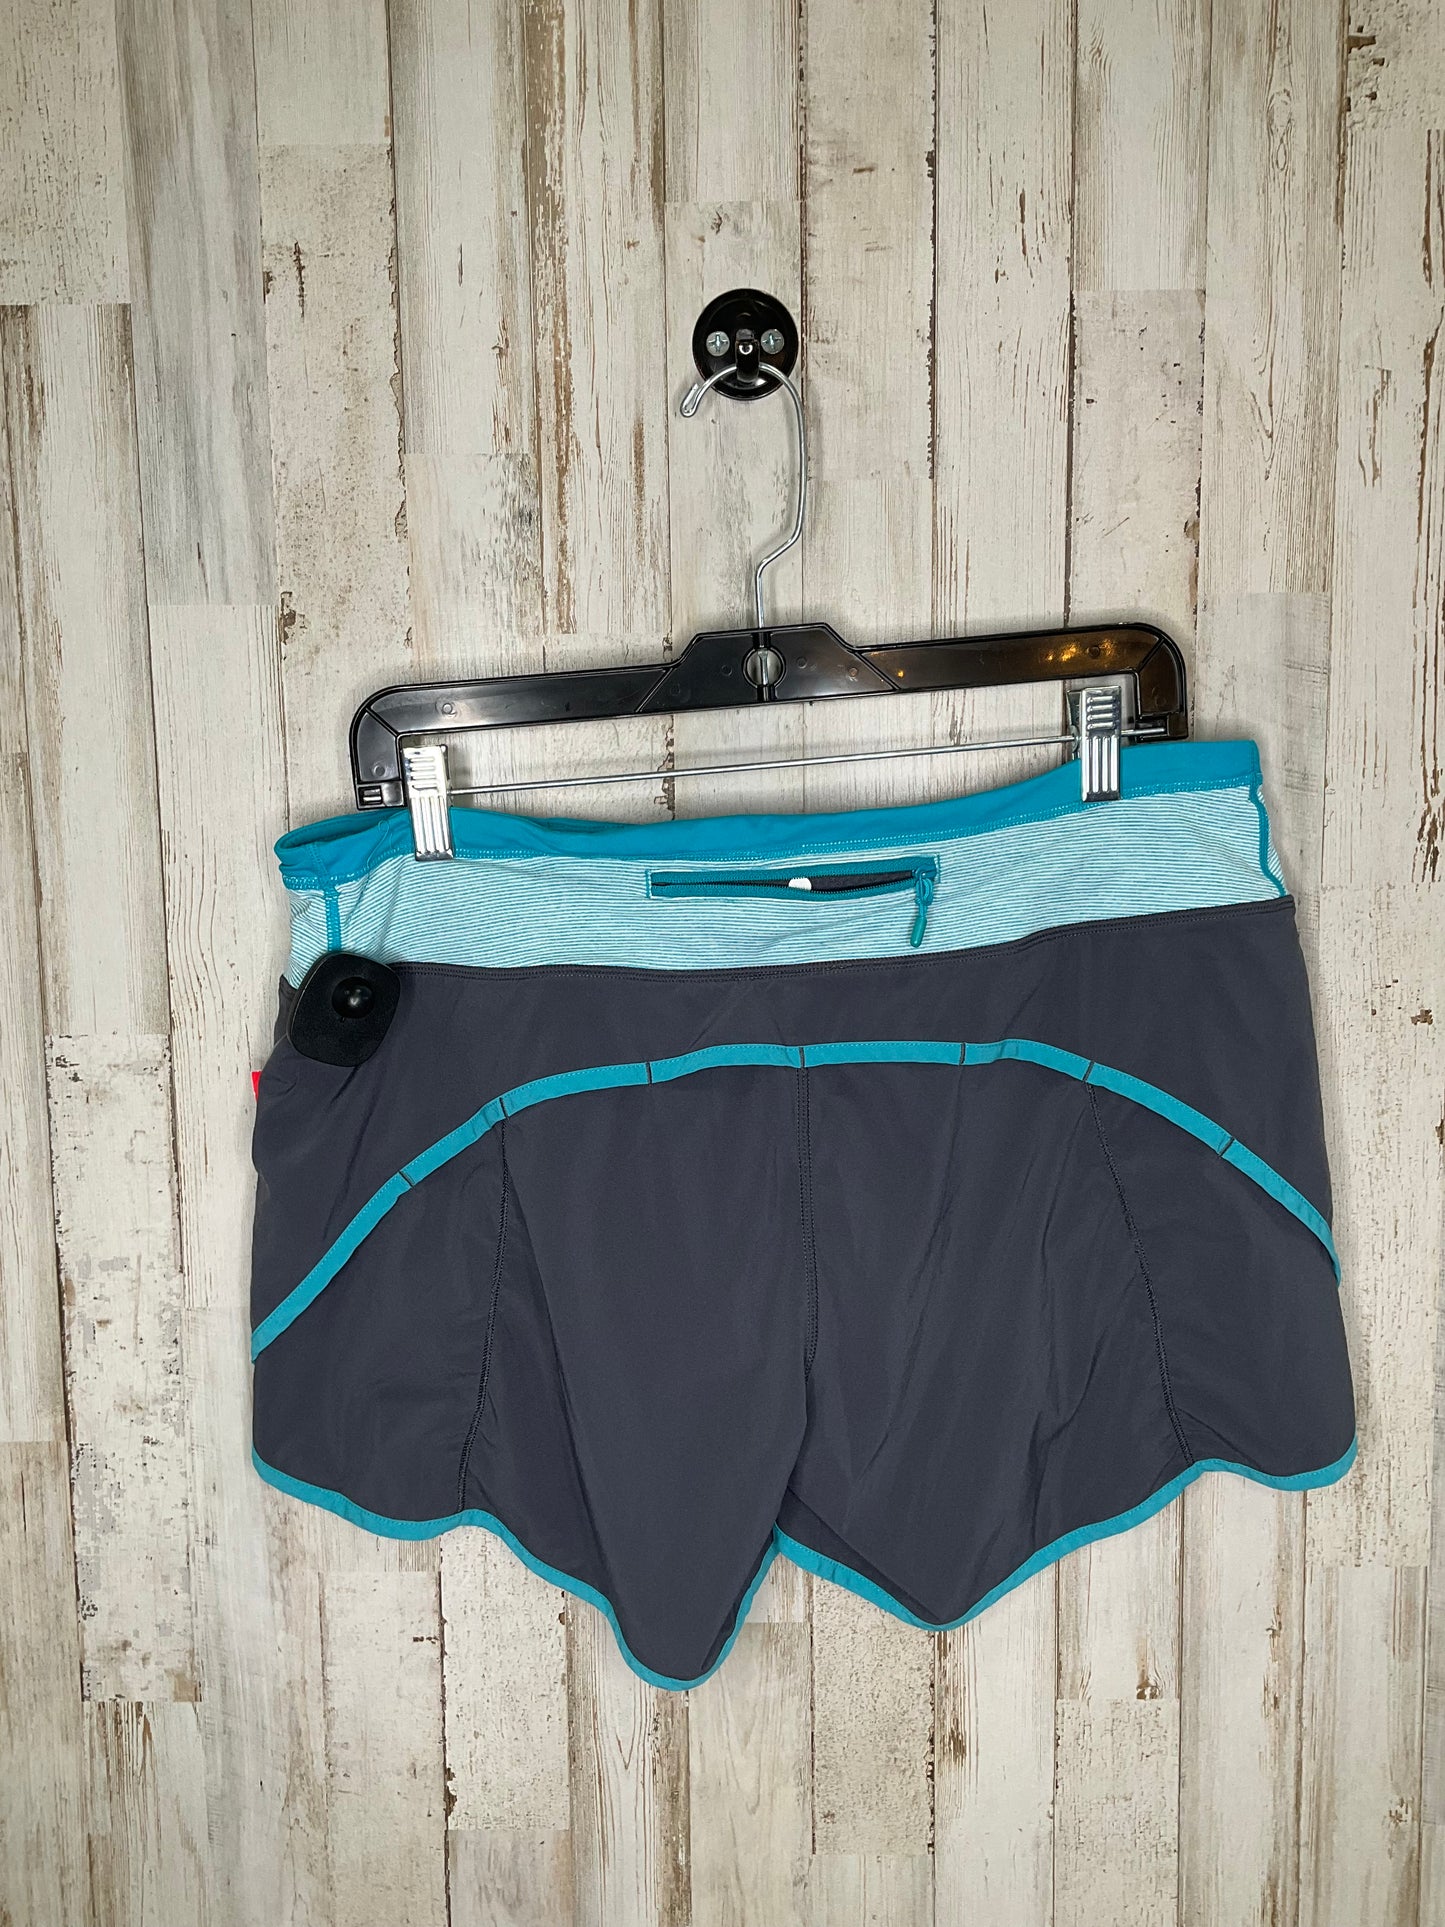 Athletic Shorts By Lululemon  Size: L